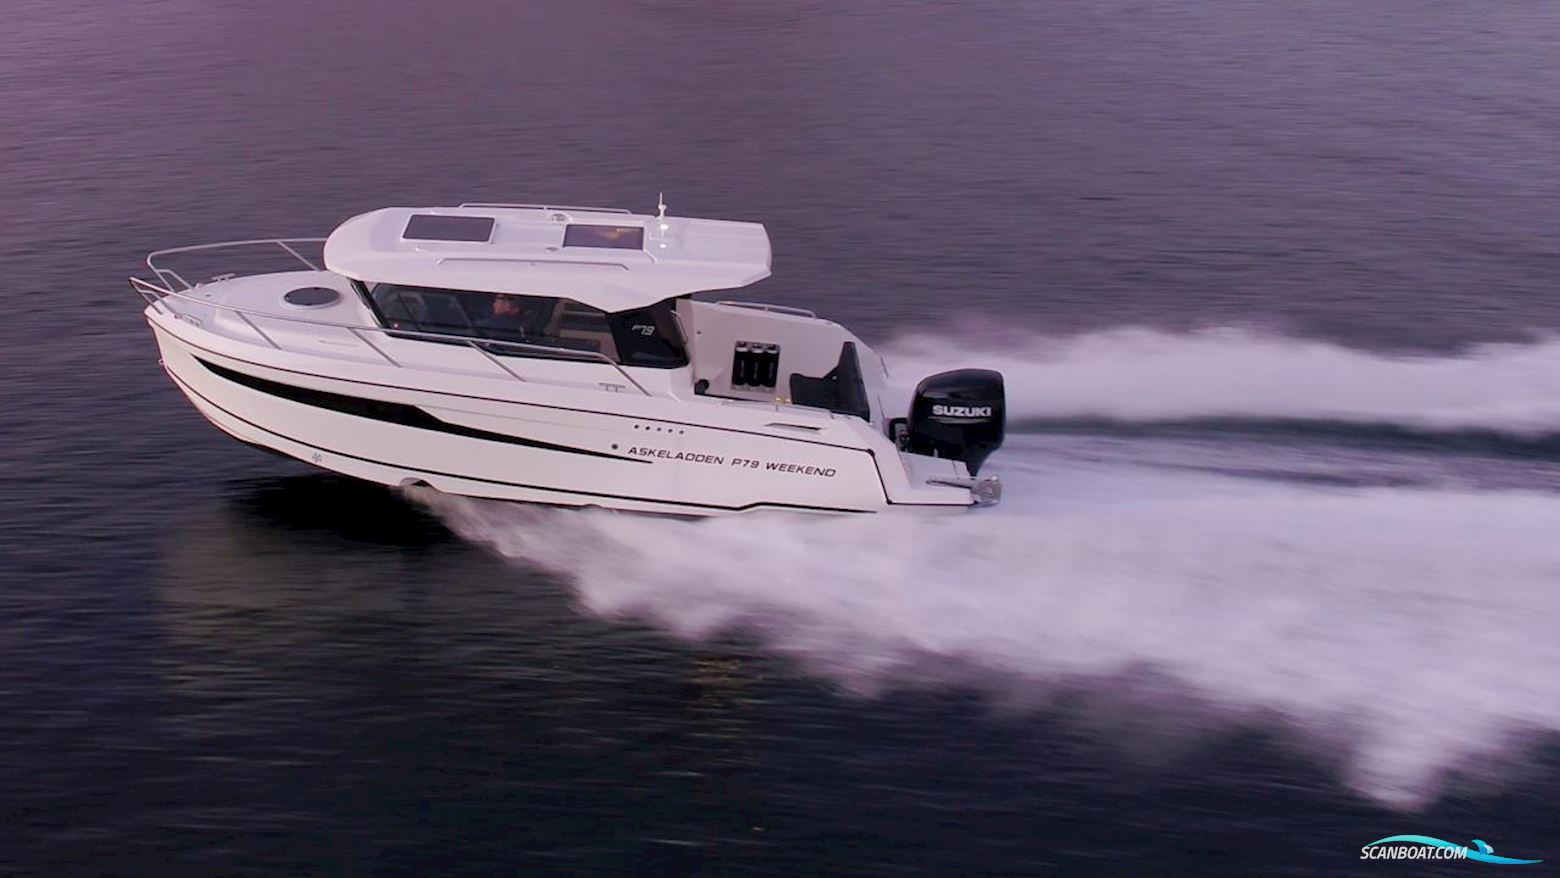 Askeladden P79 Weekend Motorbåd 2023, med Suzuki motor, Sverige